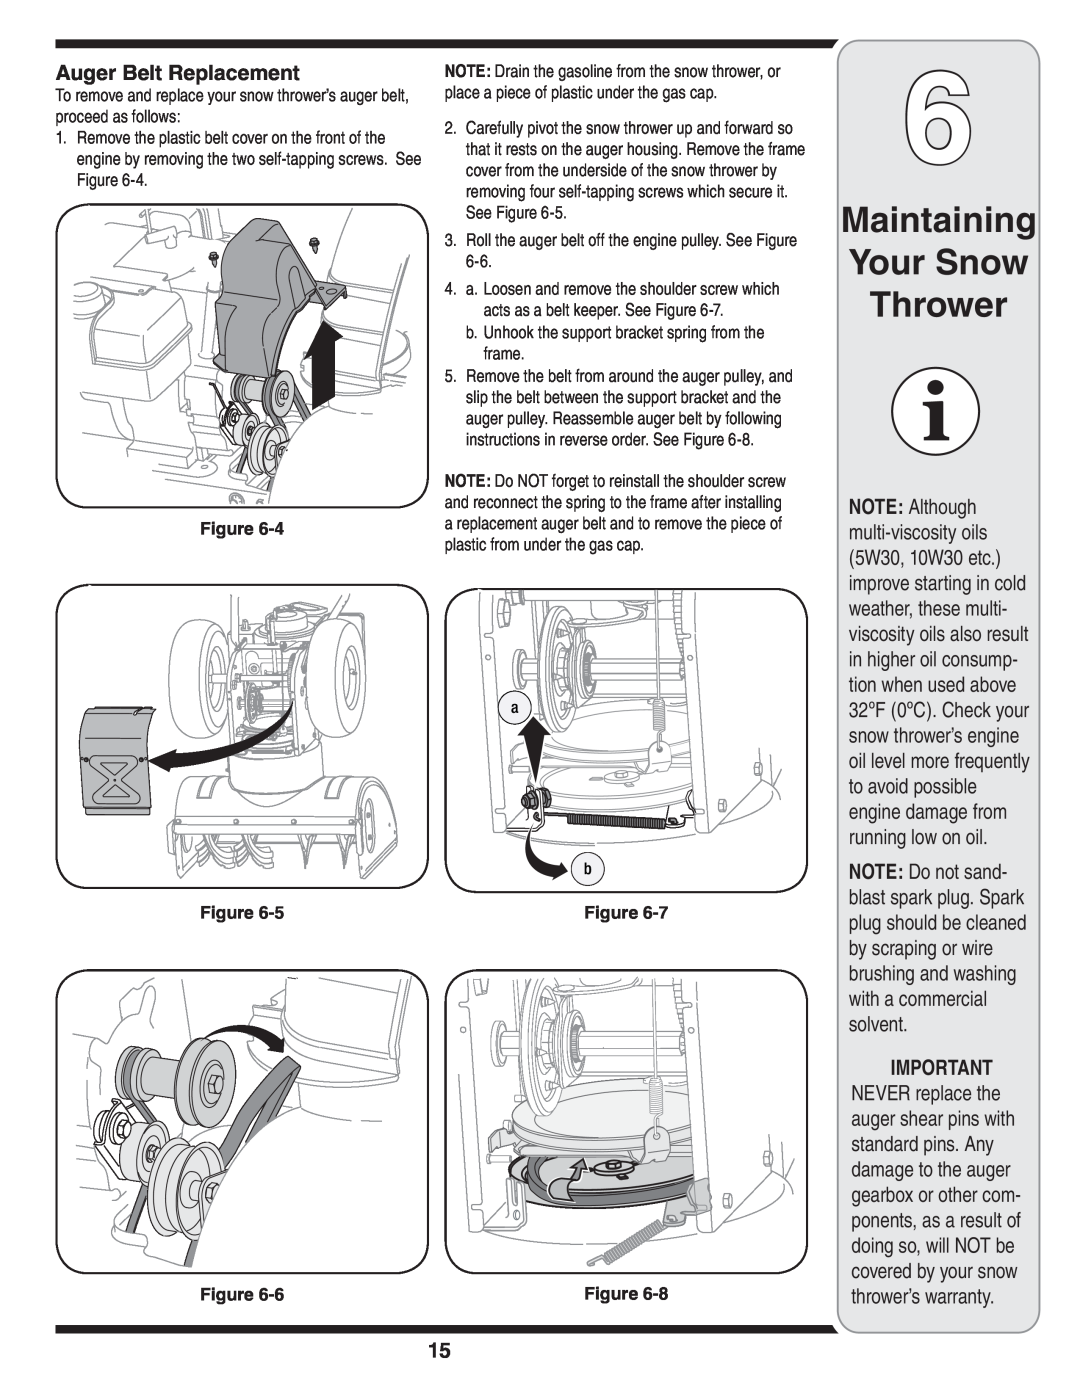 Troy-Bilt 769-03800 warranty Maintaining Your Snow Thrower, Auger Belt Replacement, Figure Figure Figure 